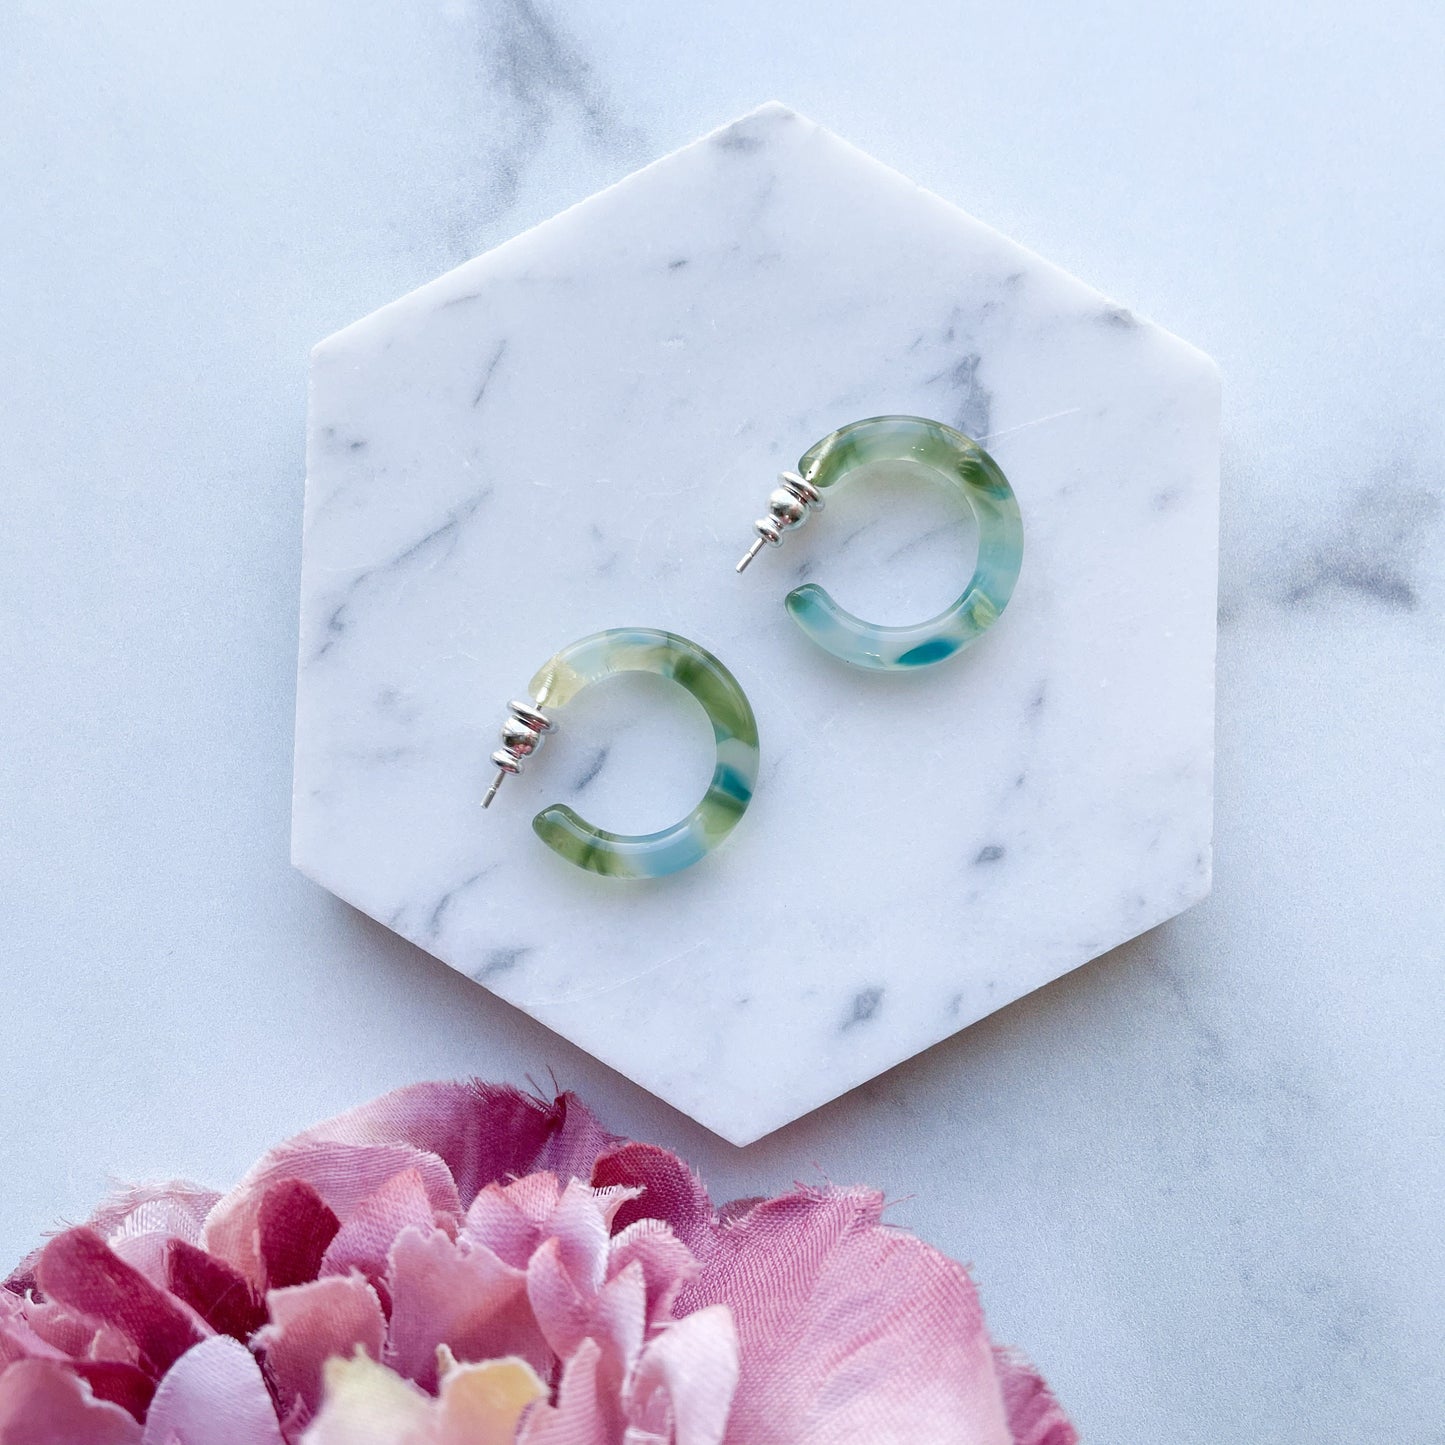 Ultra Mini Hoops in Dew Drop | Small Blue Green Acetate Hoop Earrings 925 Sterling Silver Posts Minimalist Jewelry Gift For Her